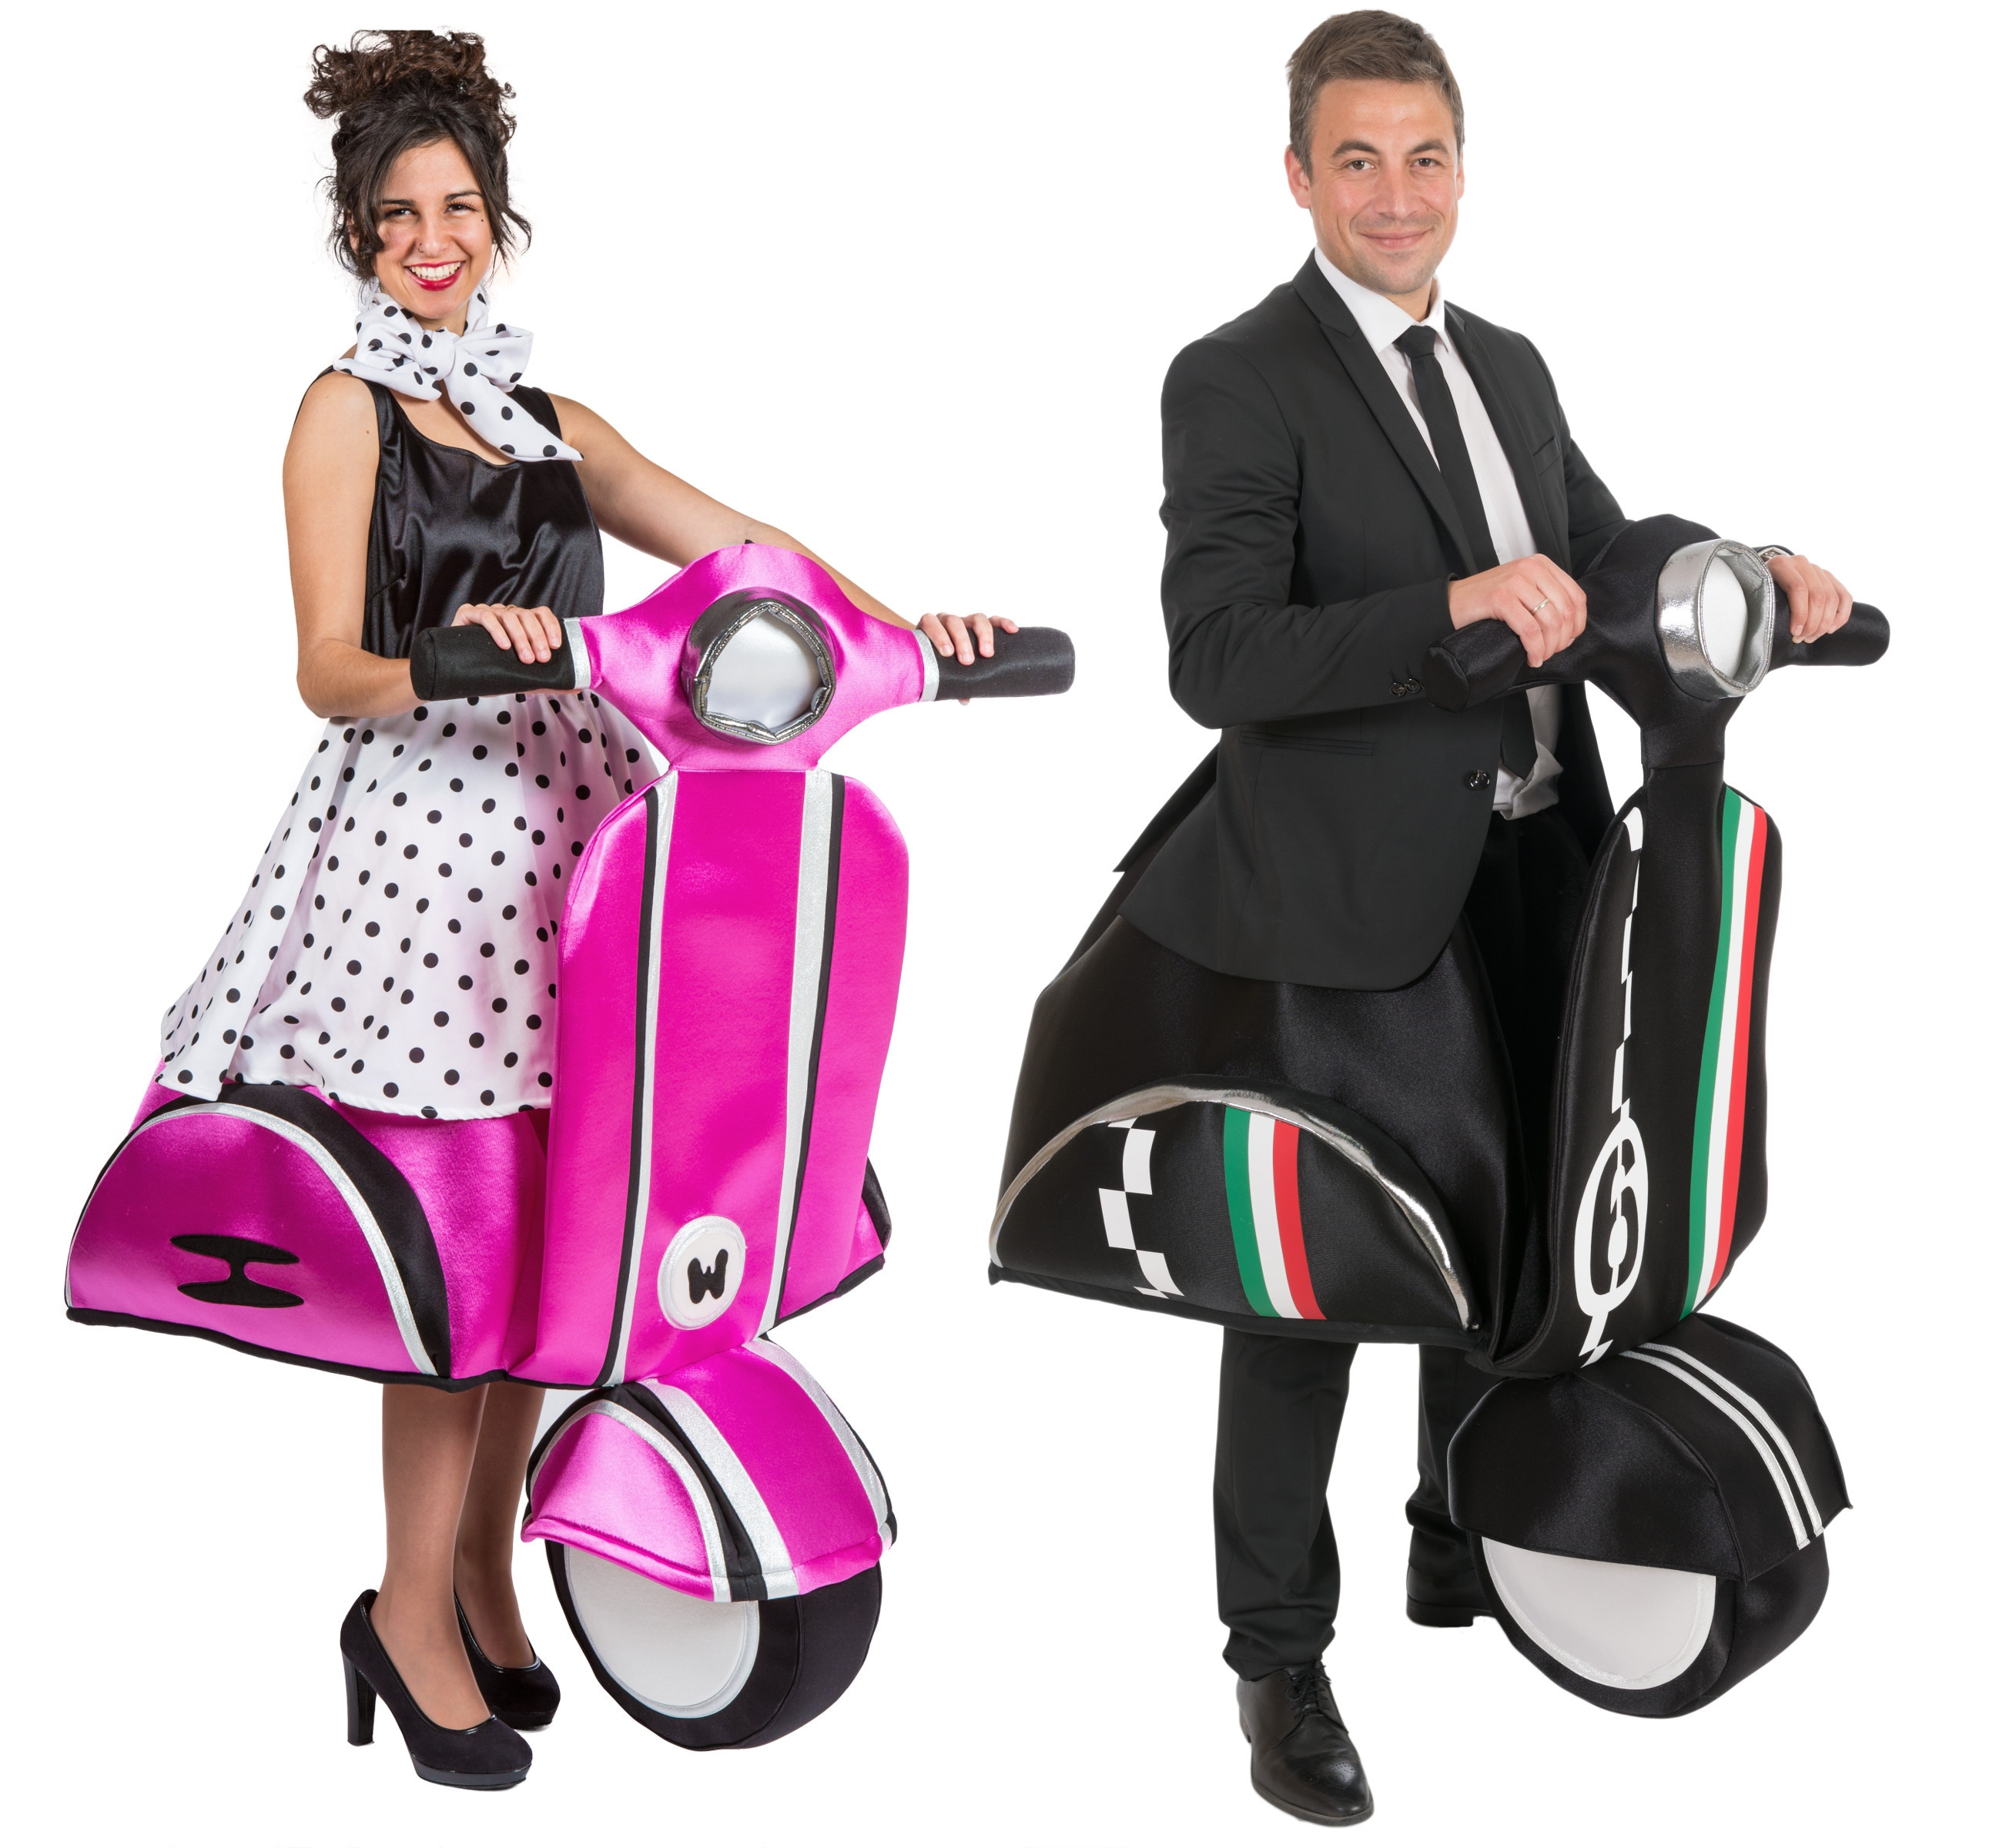 Kostüme karneval pärchen Berühmte Paare: